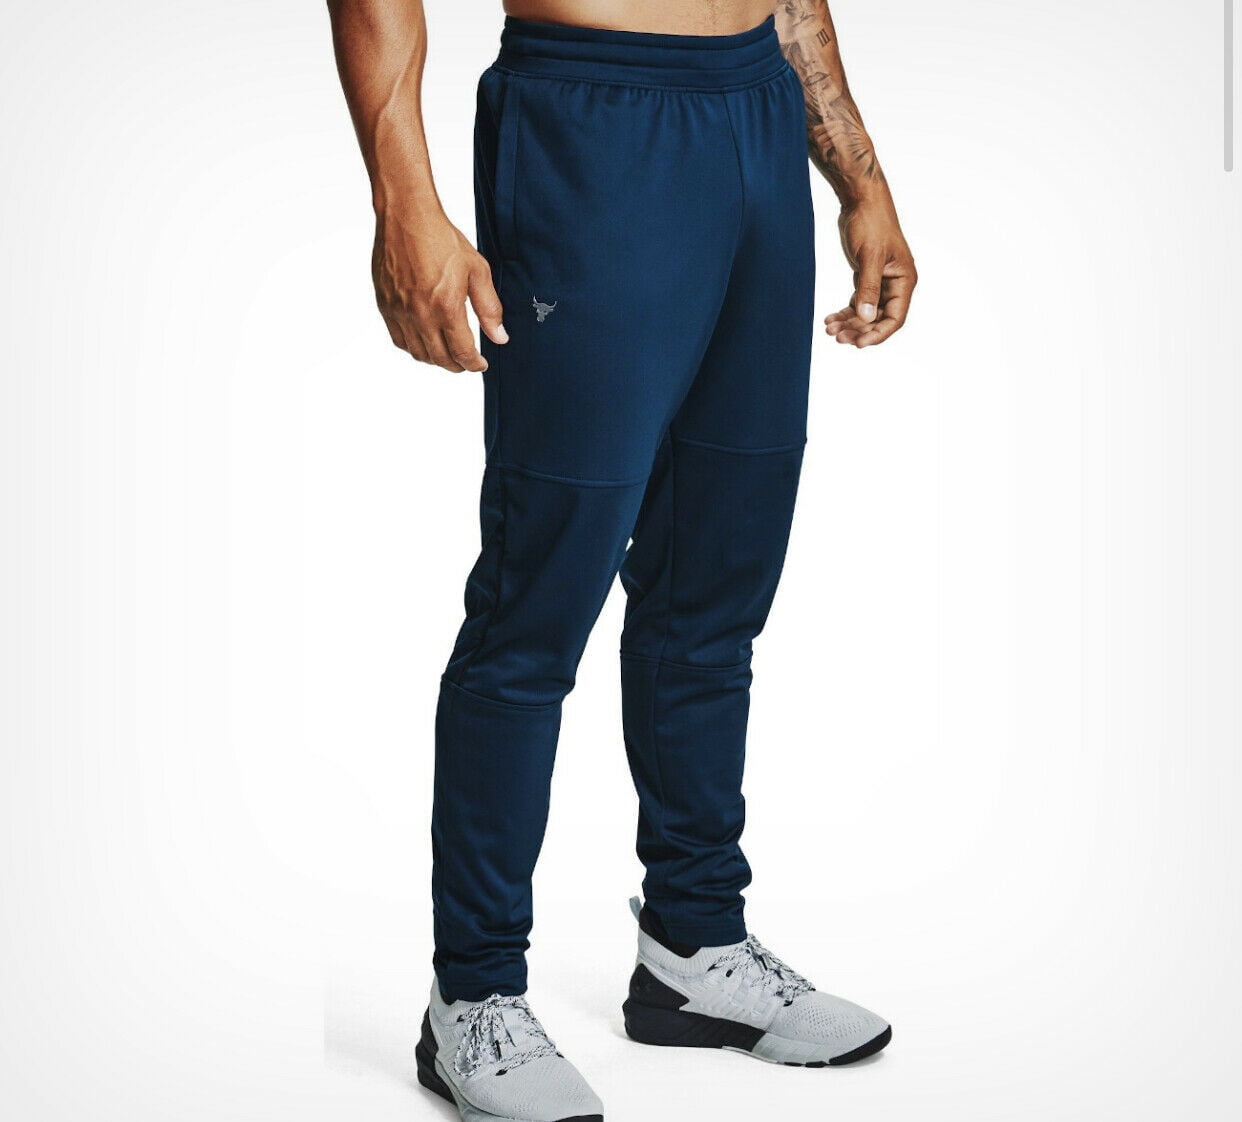 Under Armour Activewear Project Rock Blue Knit Track Pants Pockets Men Size